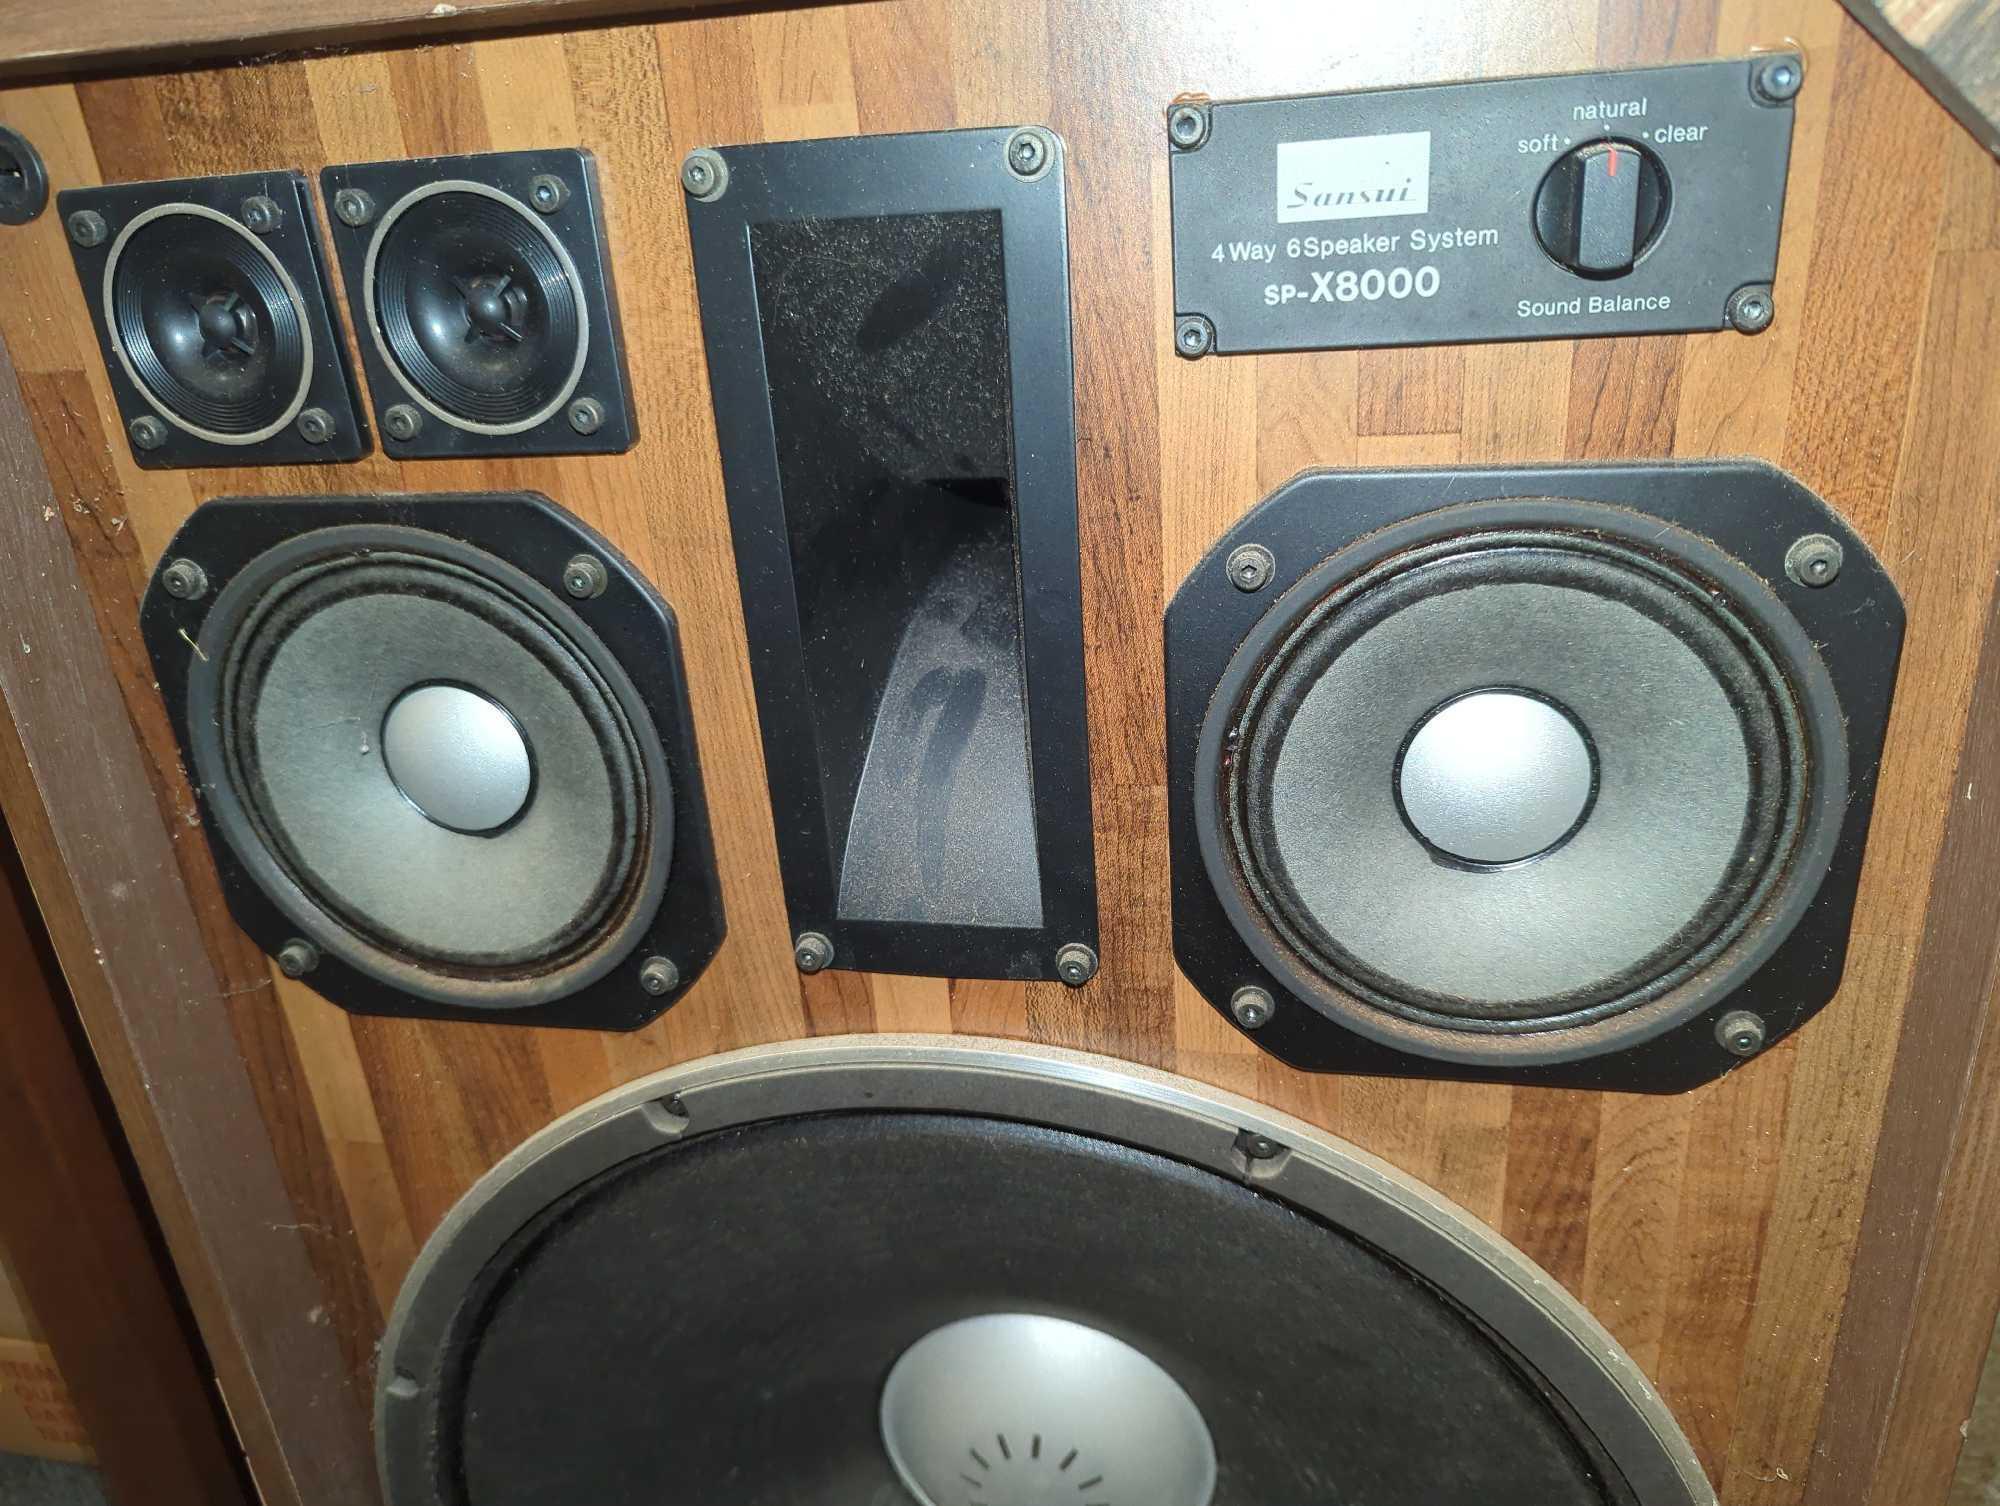 SANSUI 4 Way Speaker System, Model SP-X8000, Approximate Dimensions - 26.5" H x 18" W x 11" D,